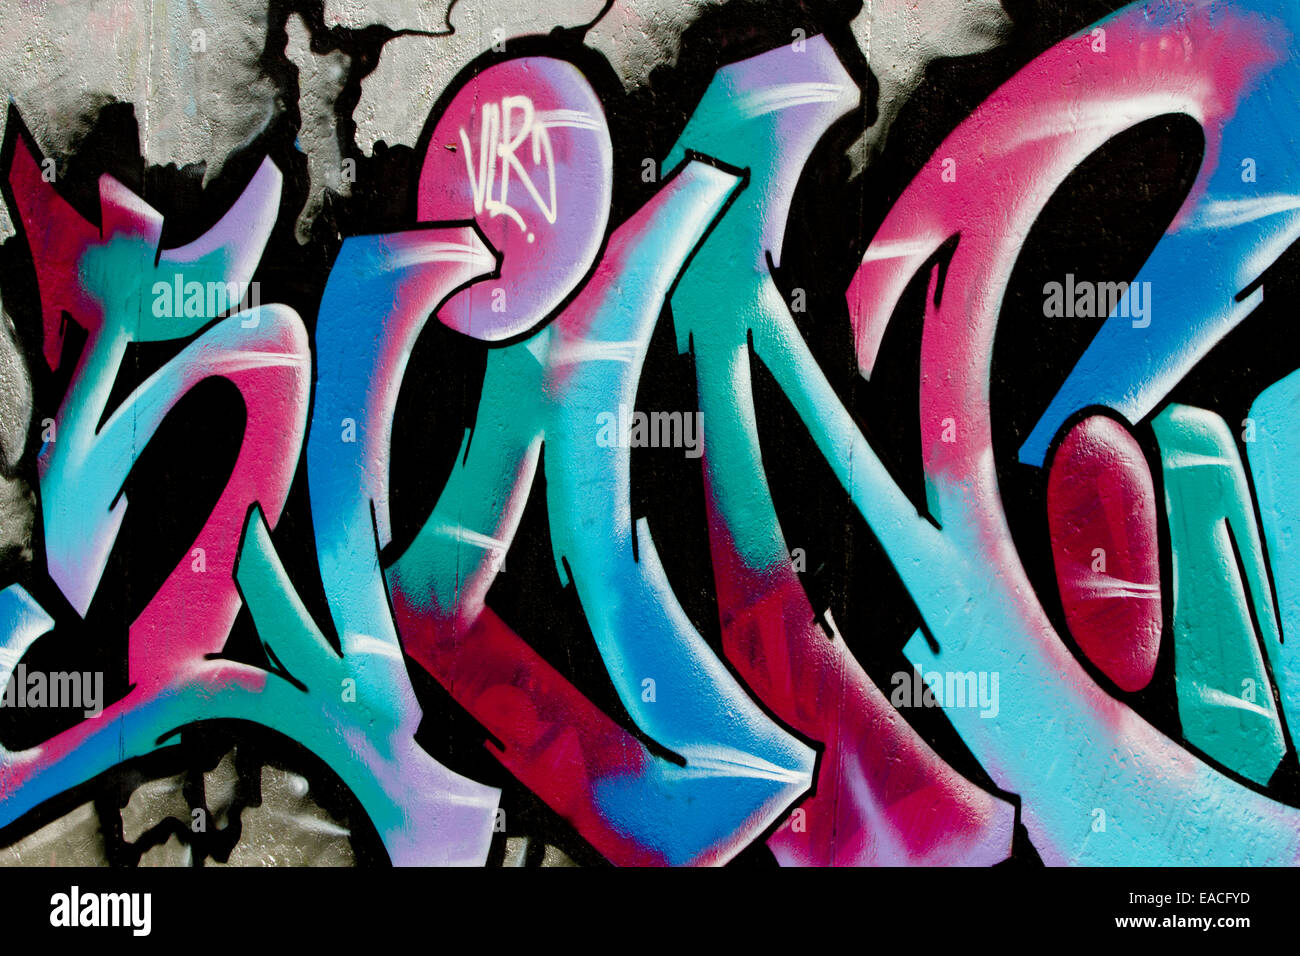 Graffiti Berlin Wall Art Urban Colour Letters Stock Photo Alamy